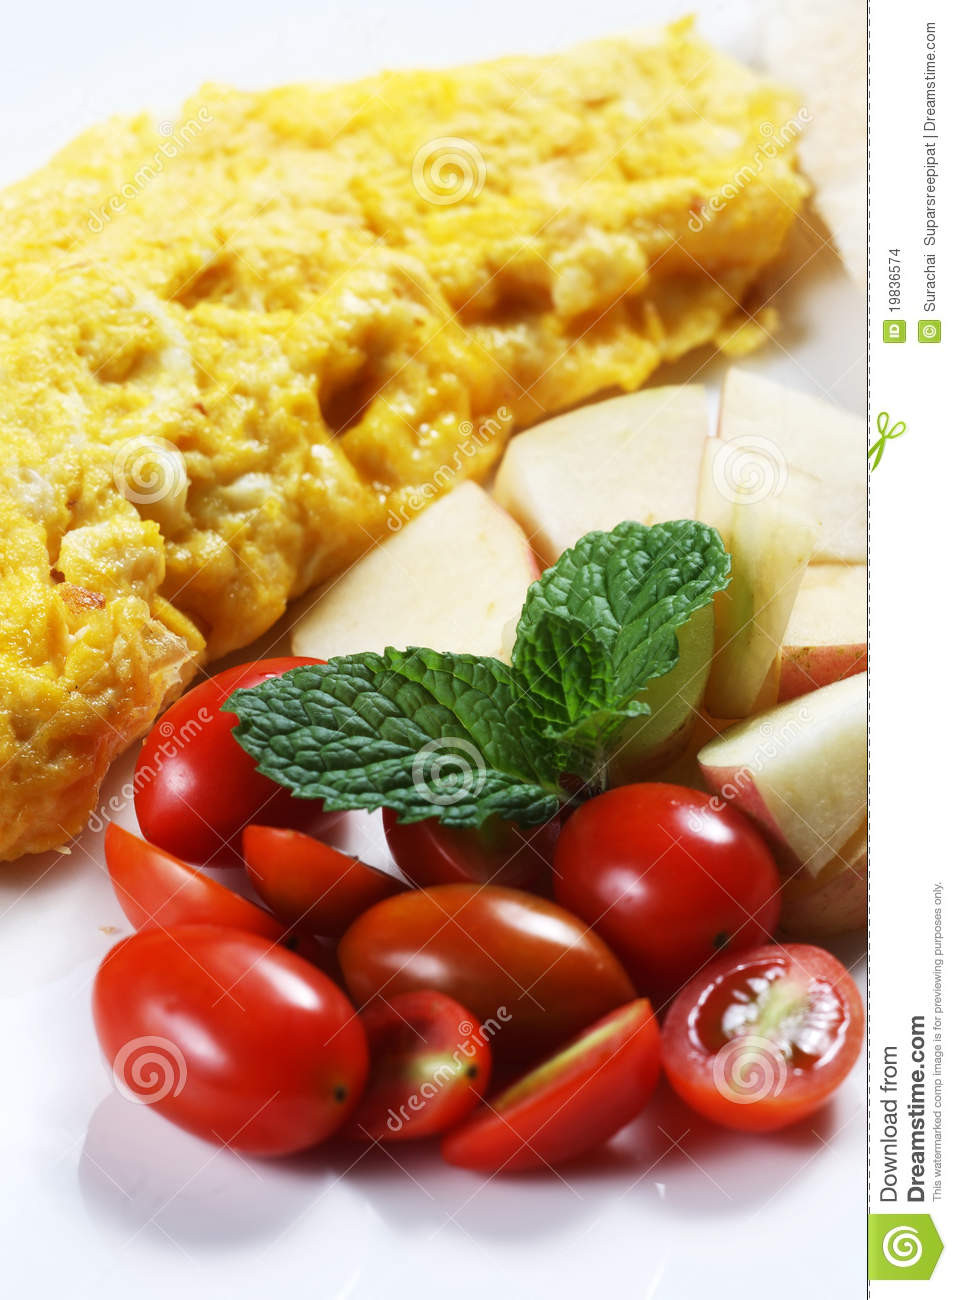 Healthy Low Fat Breakfast
 Healthy Low fat Breakfast 01 Stock Image